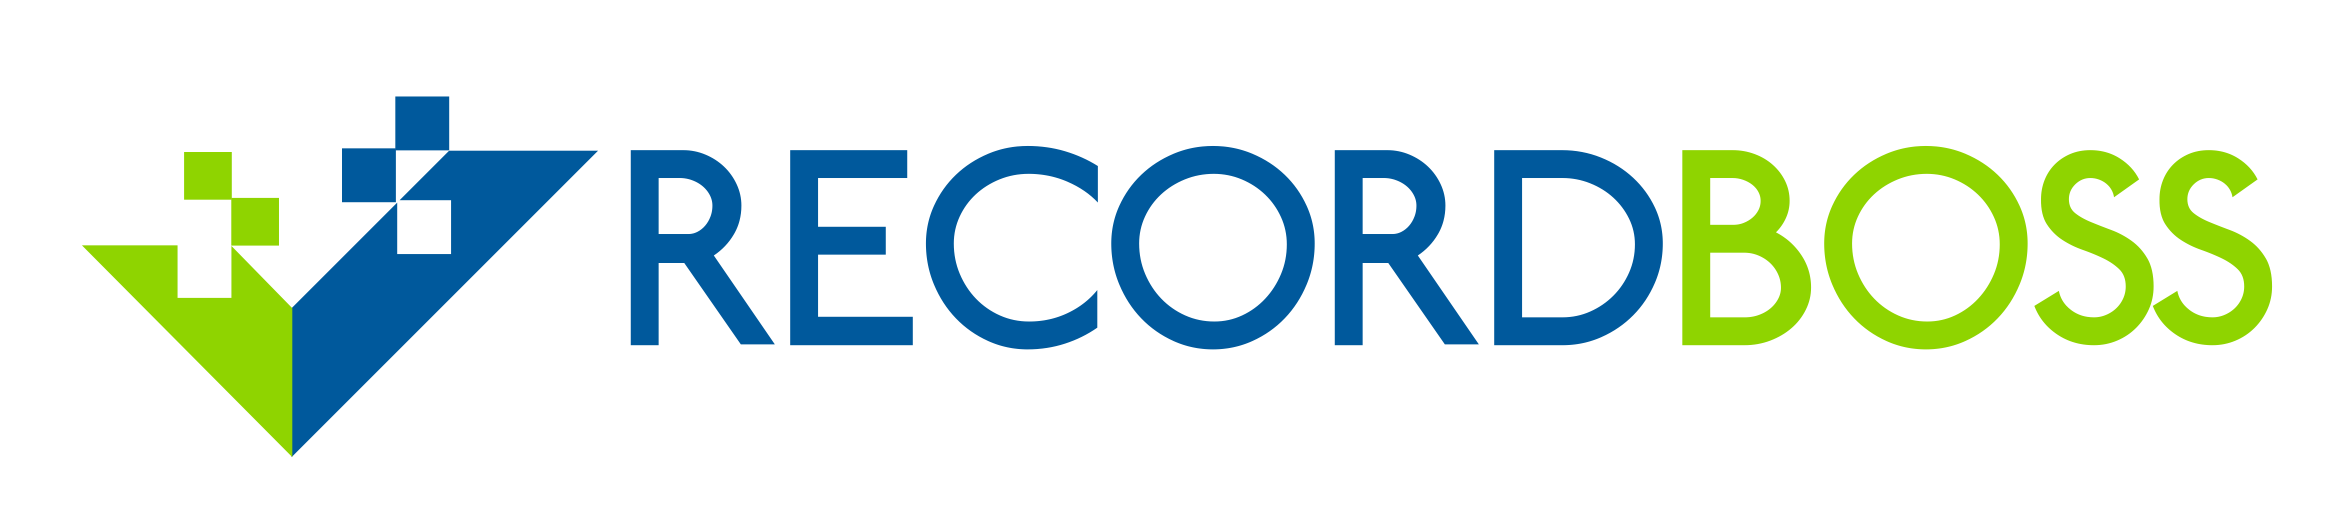 RecordBoss logo